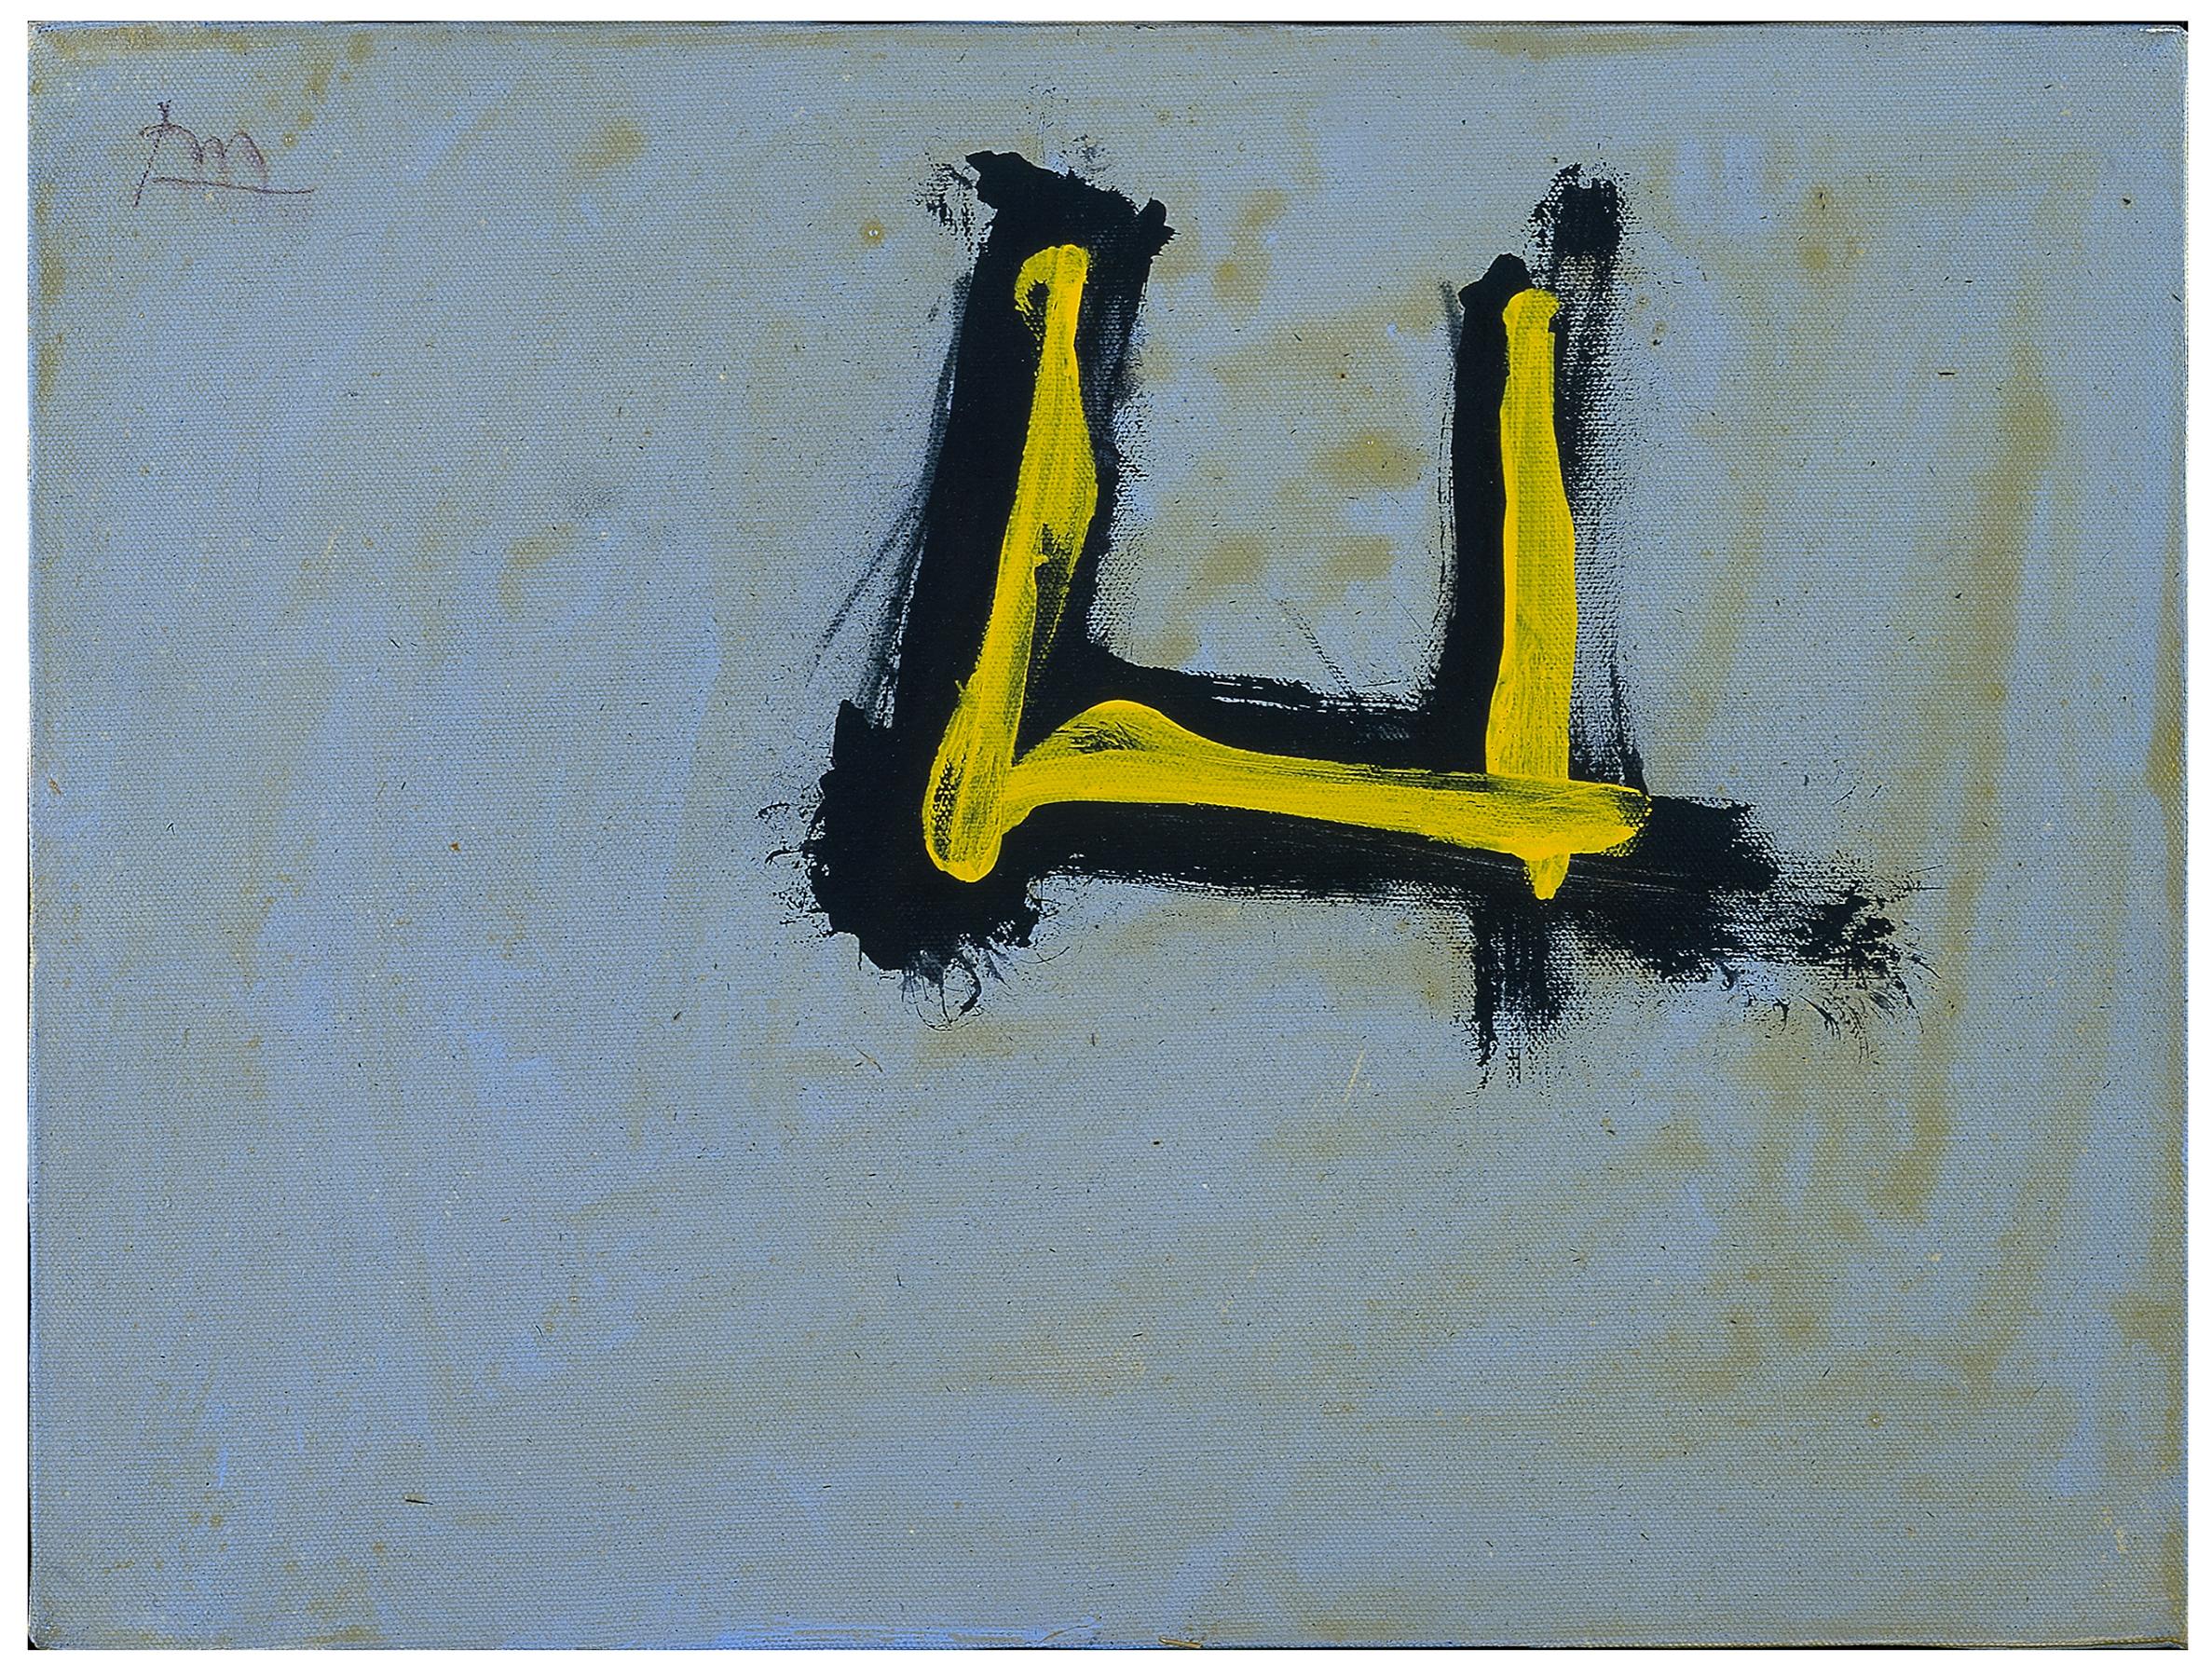 Abstract Painting Robert Motherwell - Ouvert sans titre (jaune)